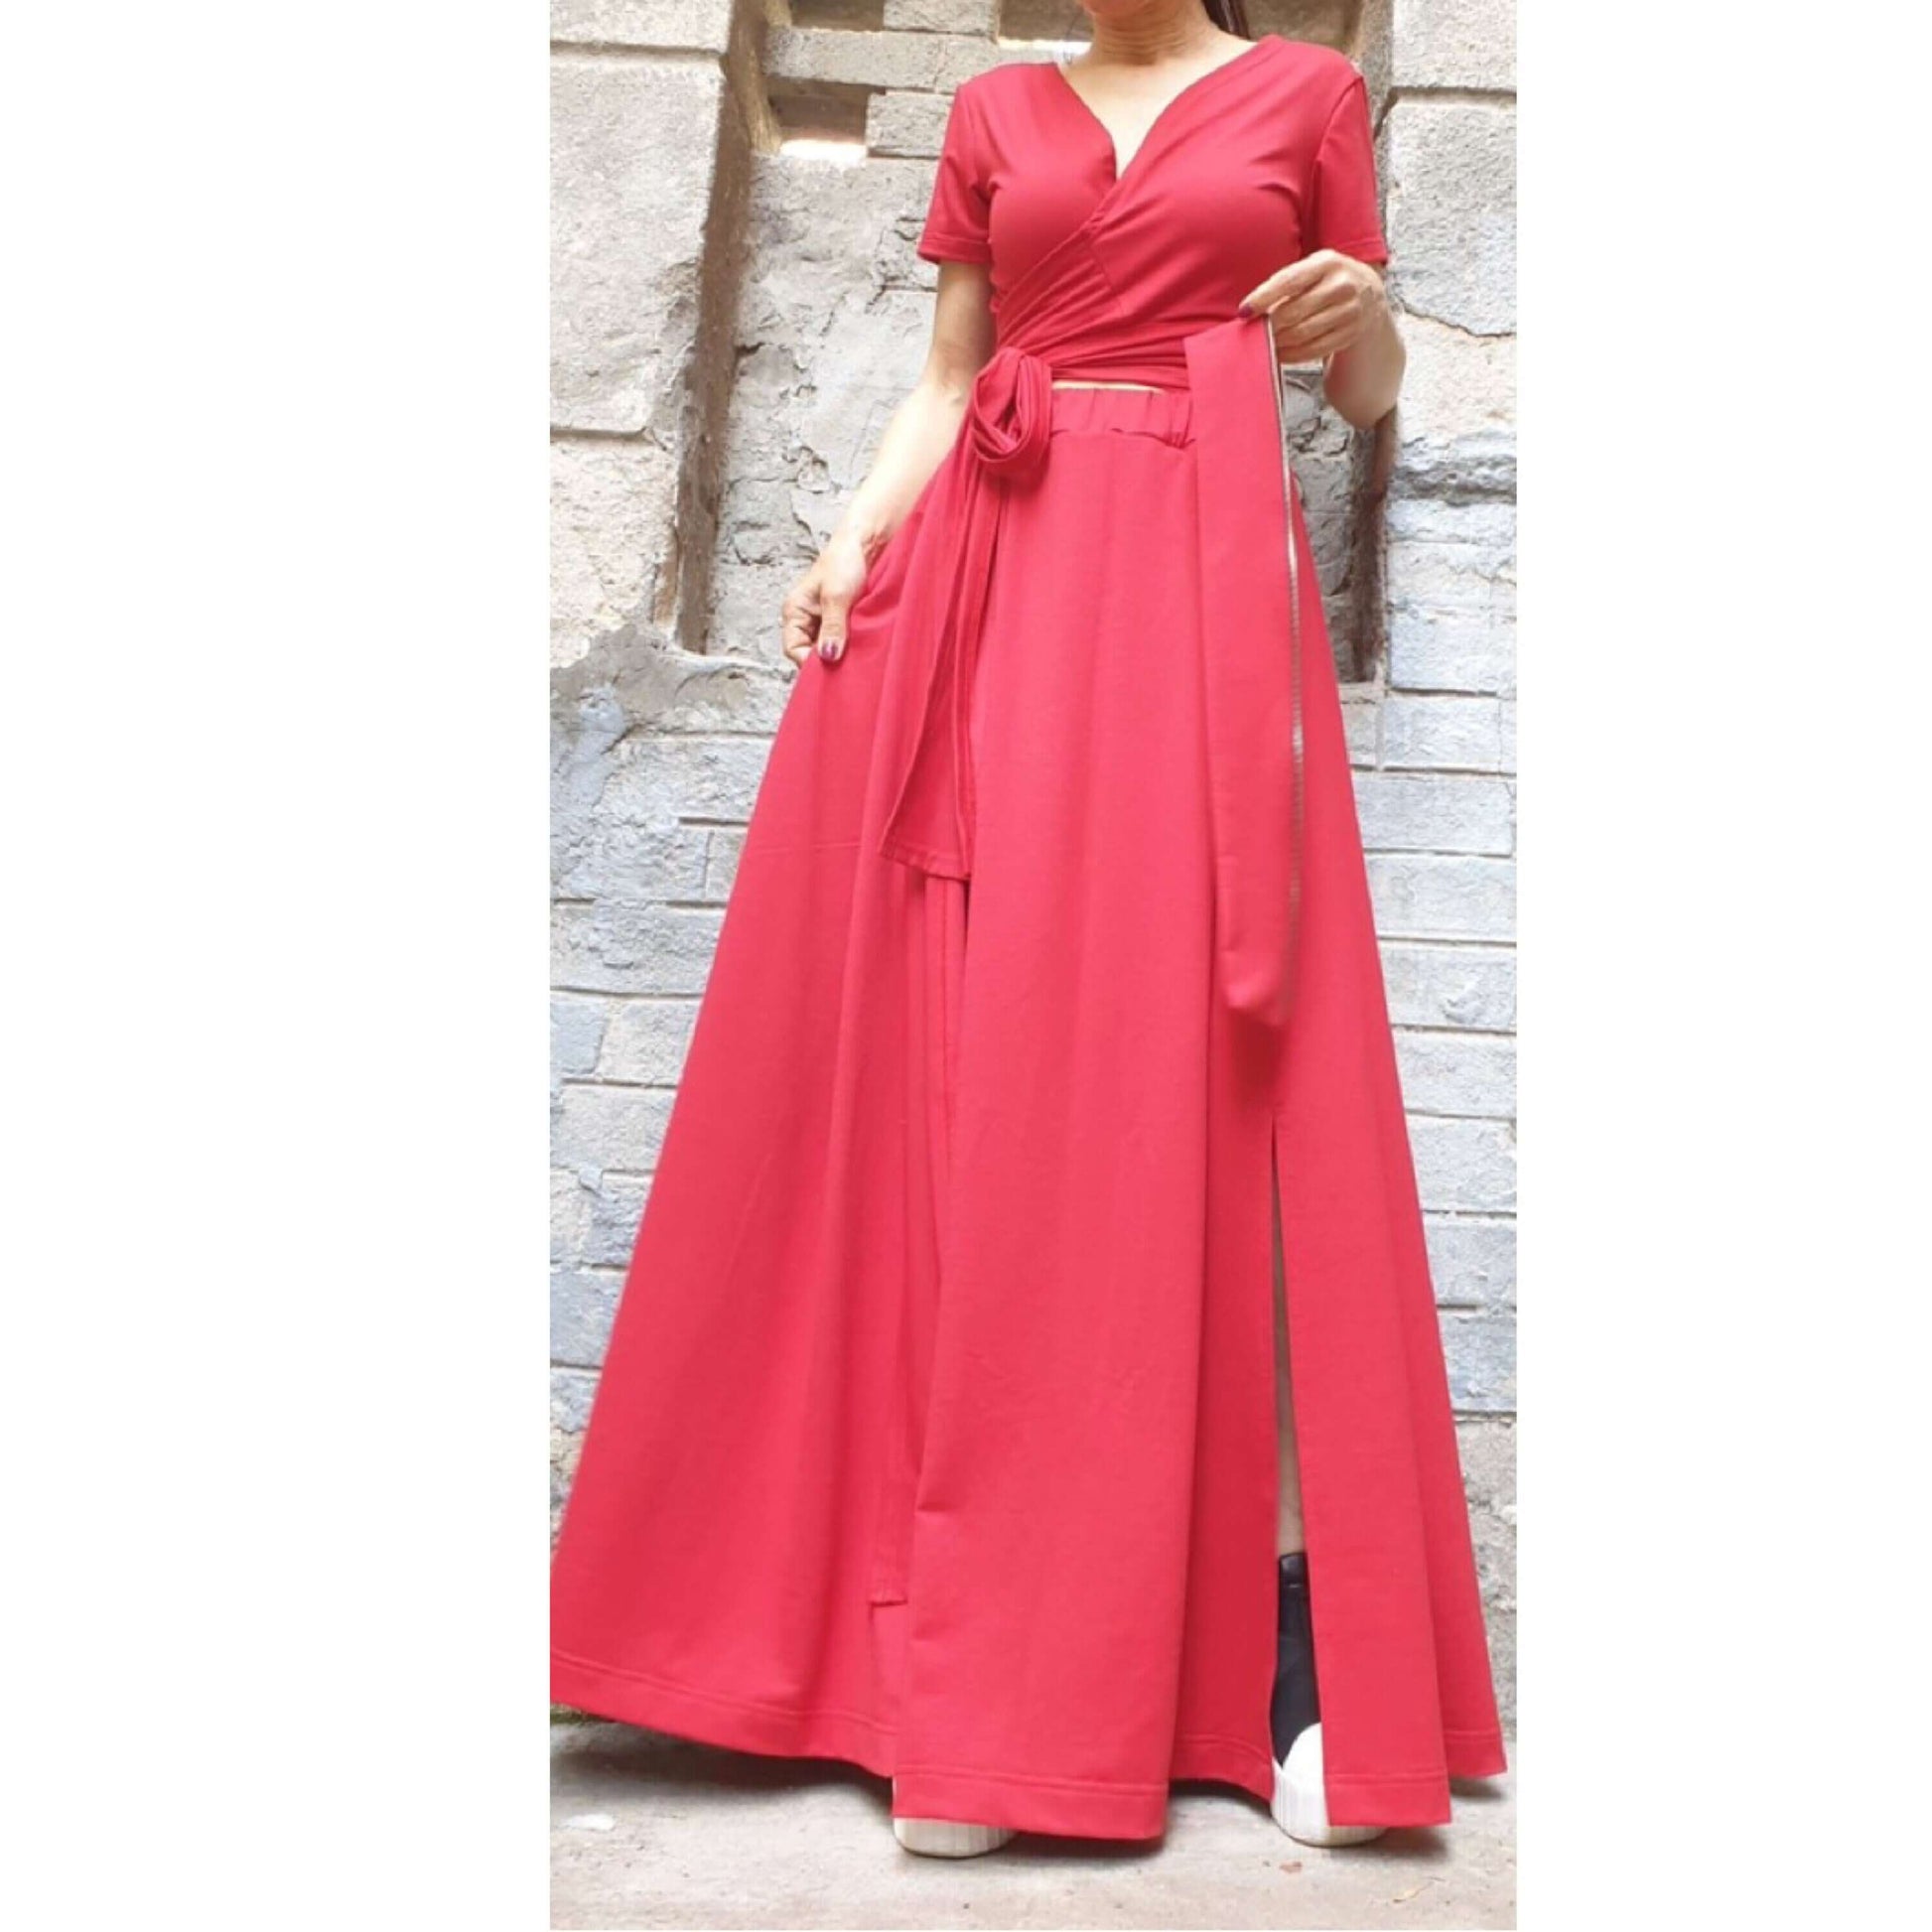 Everyday Red Skirt Blouse Set - Handmade clothing from AngelBySilvia - Top Designer Brands 